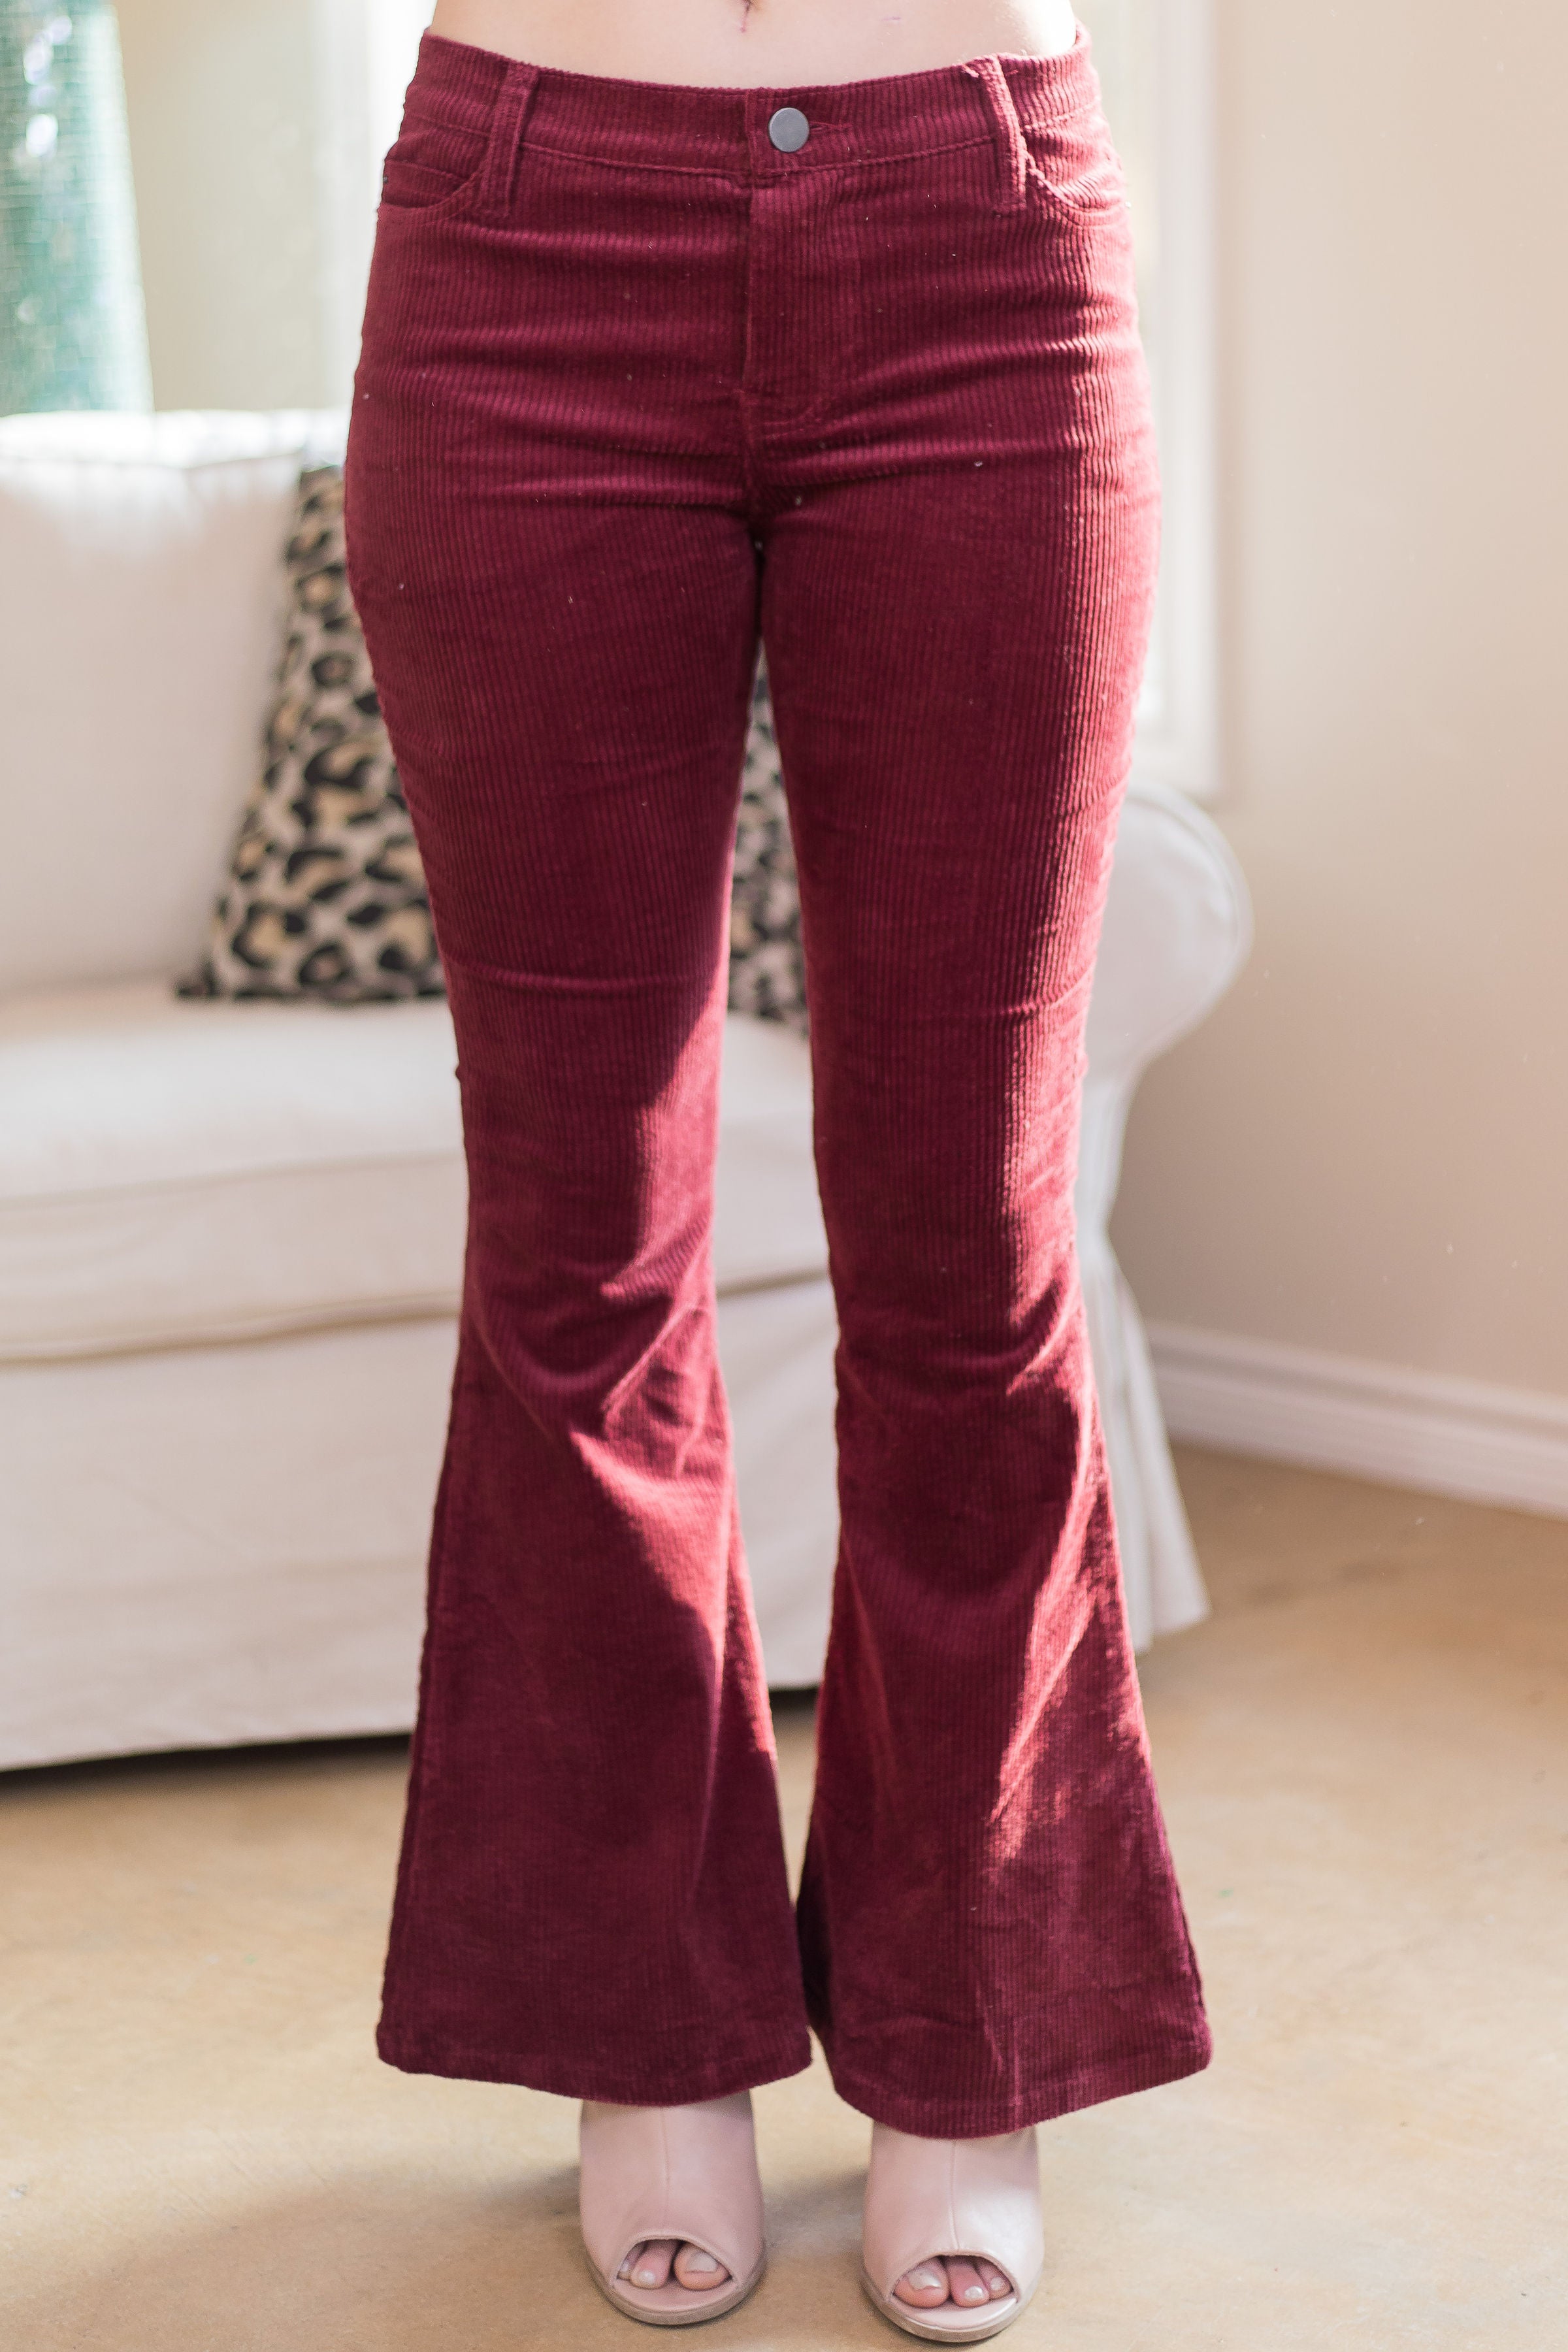 women's plus size boutique maroon burgundy corduroy flare leg pants jeans outfit groovy hippie vintage bell bottoms